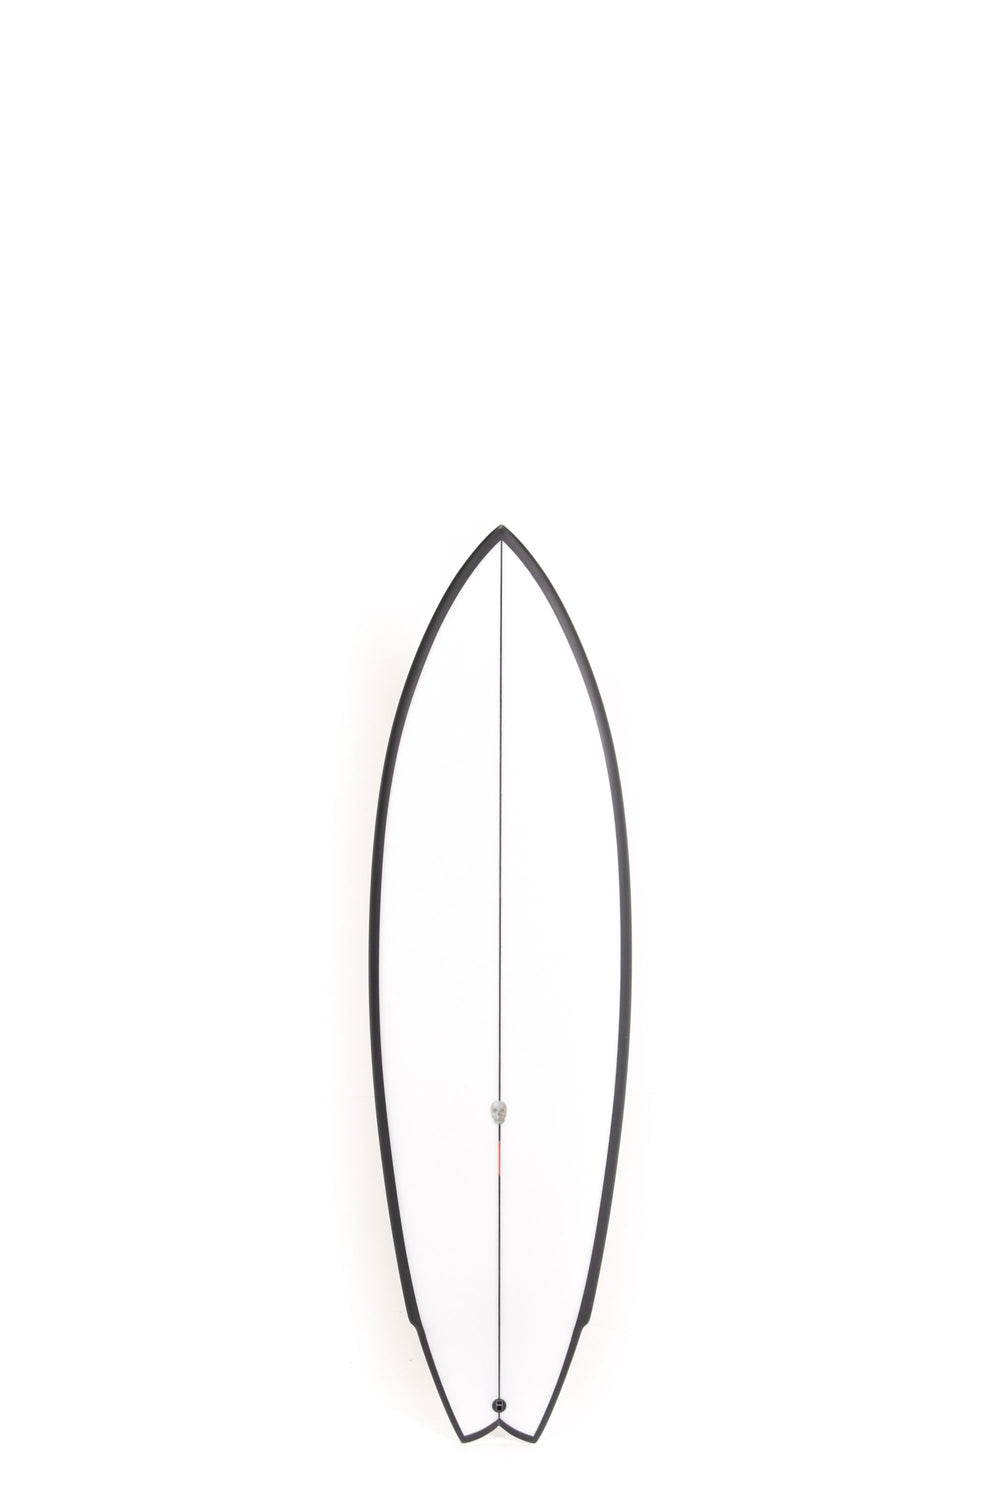 Pukas Surf Shop - Christenson Surfboards - LANE SPLITTER SWALLOW - 5'8